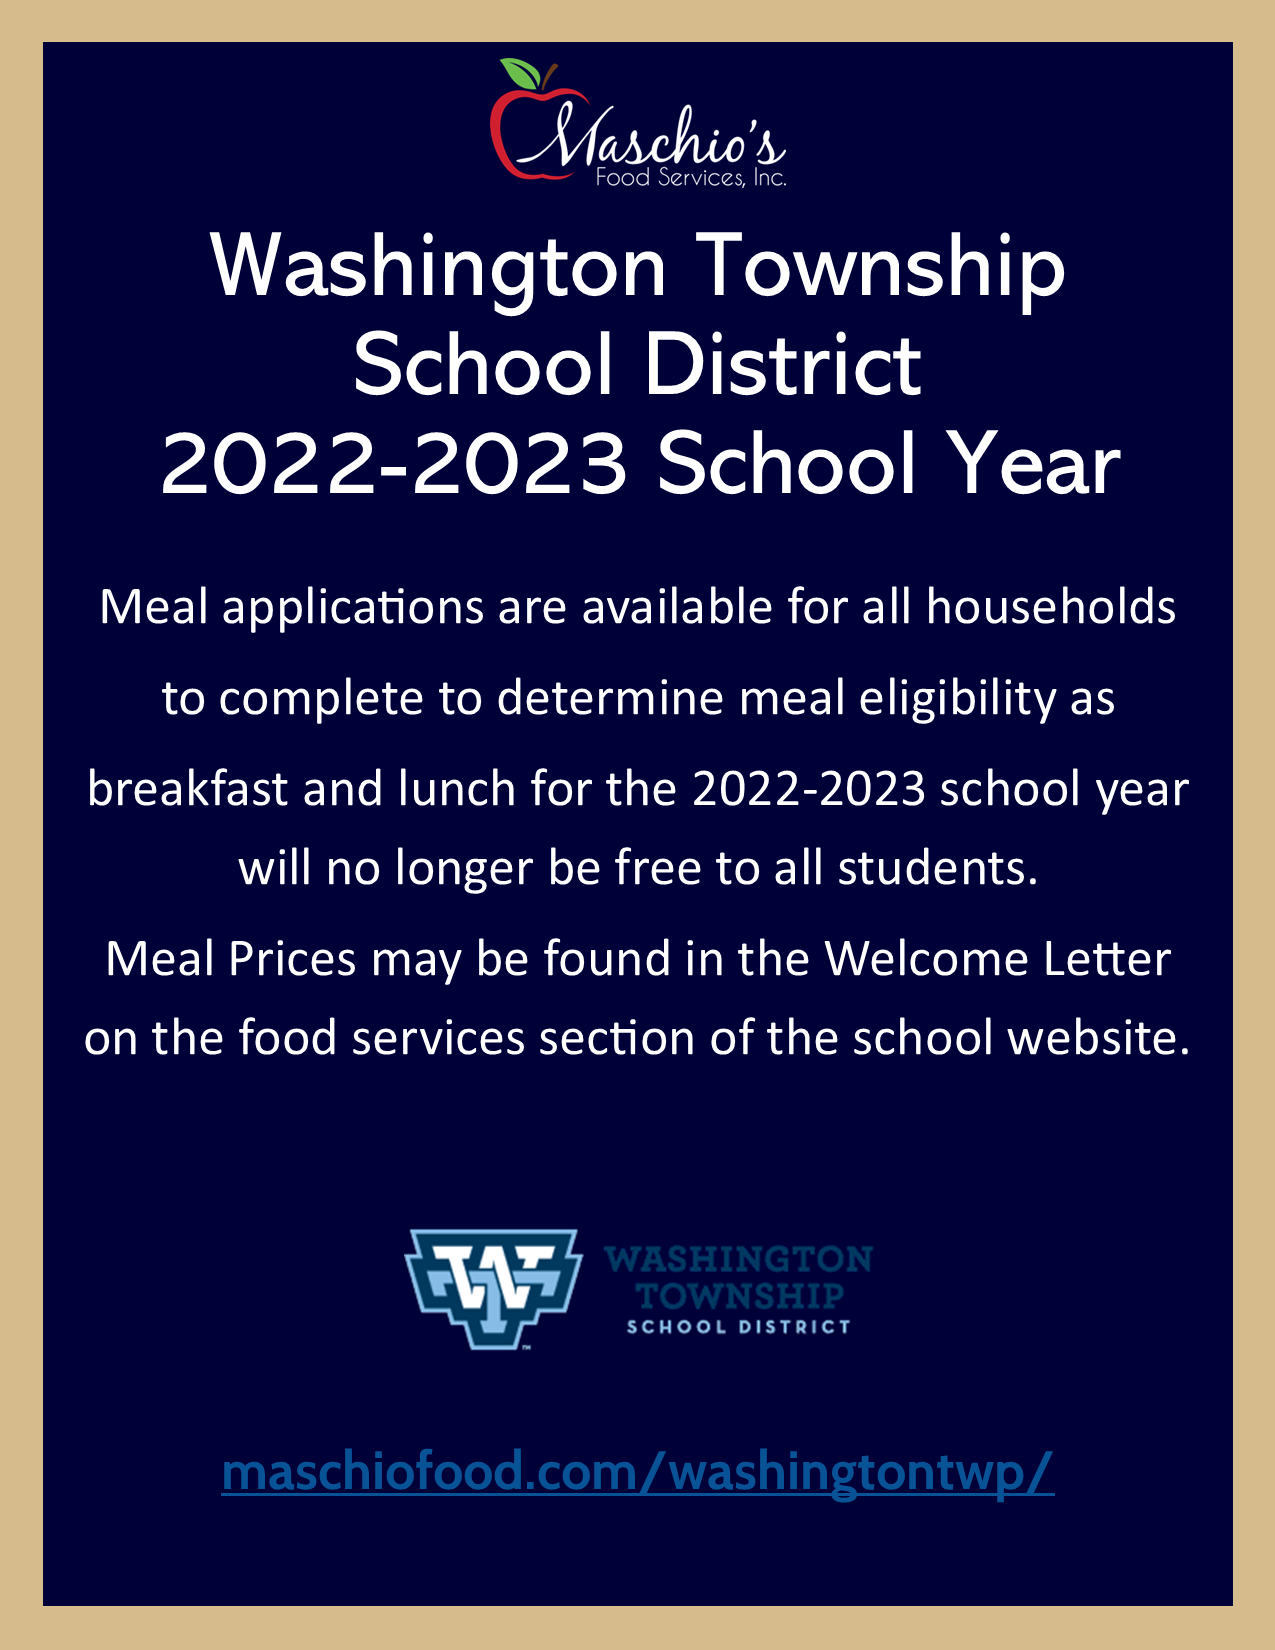 Washington Township Maschio's Food Services